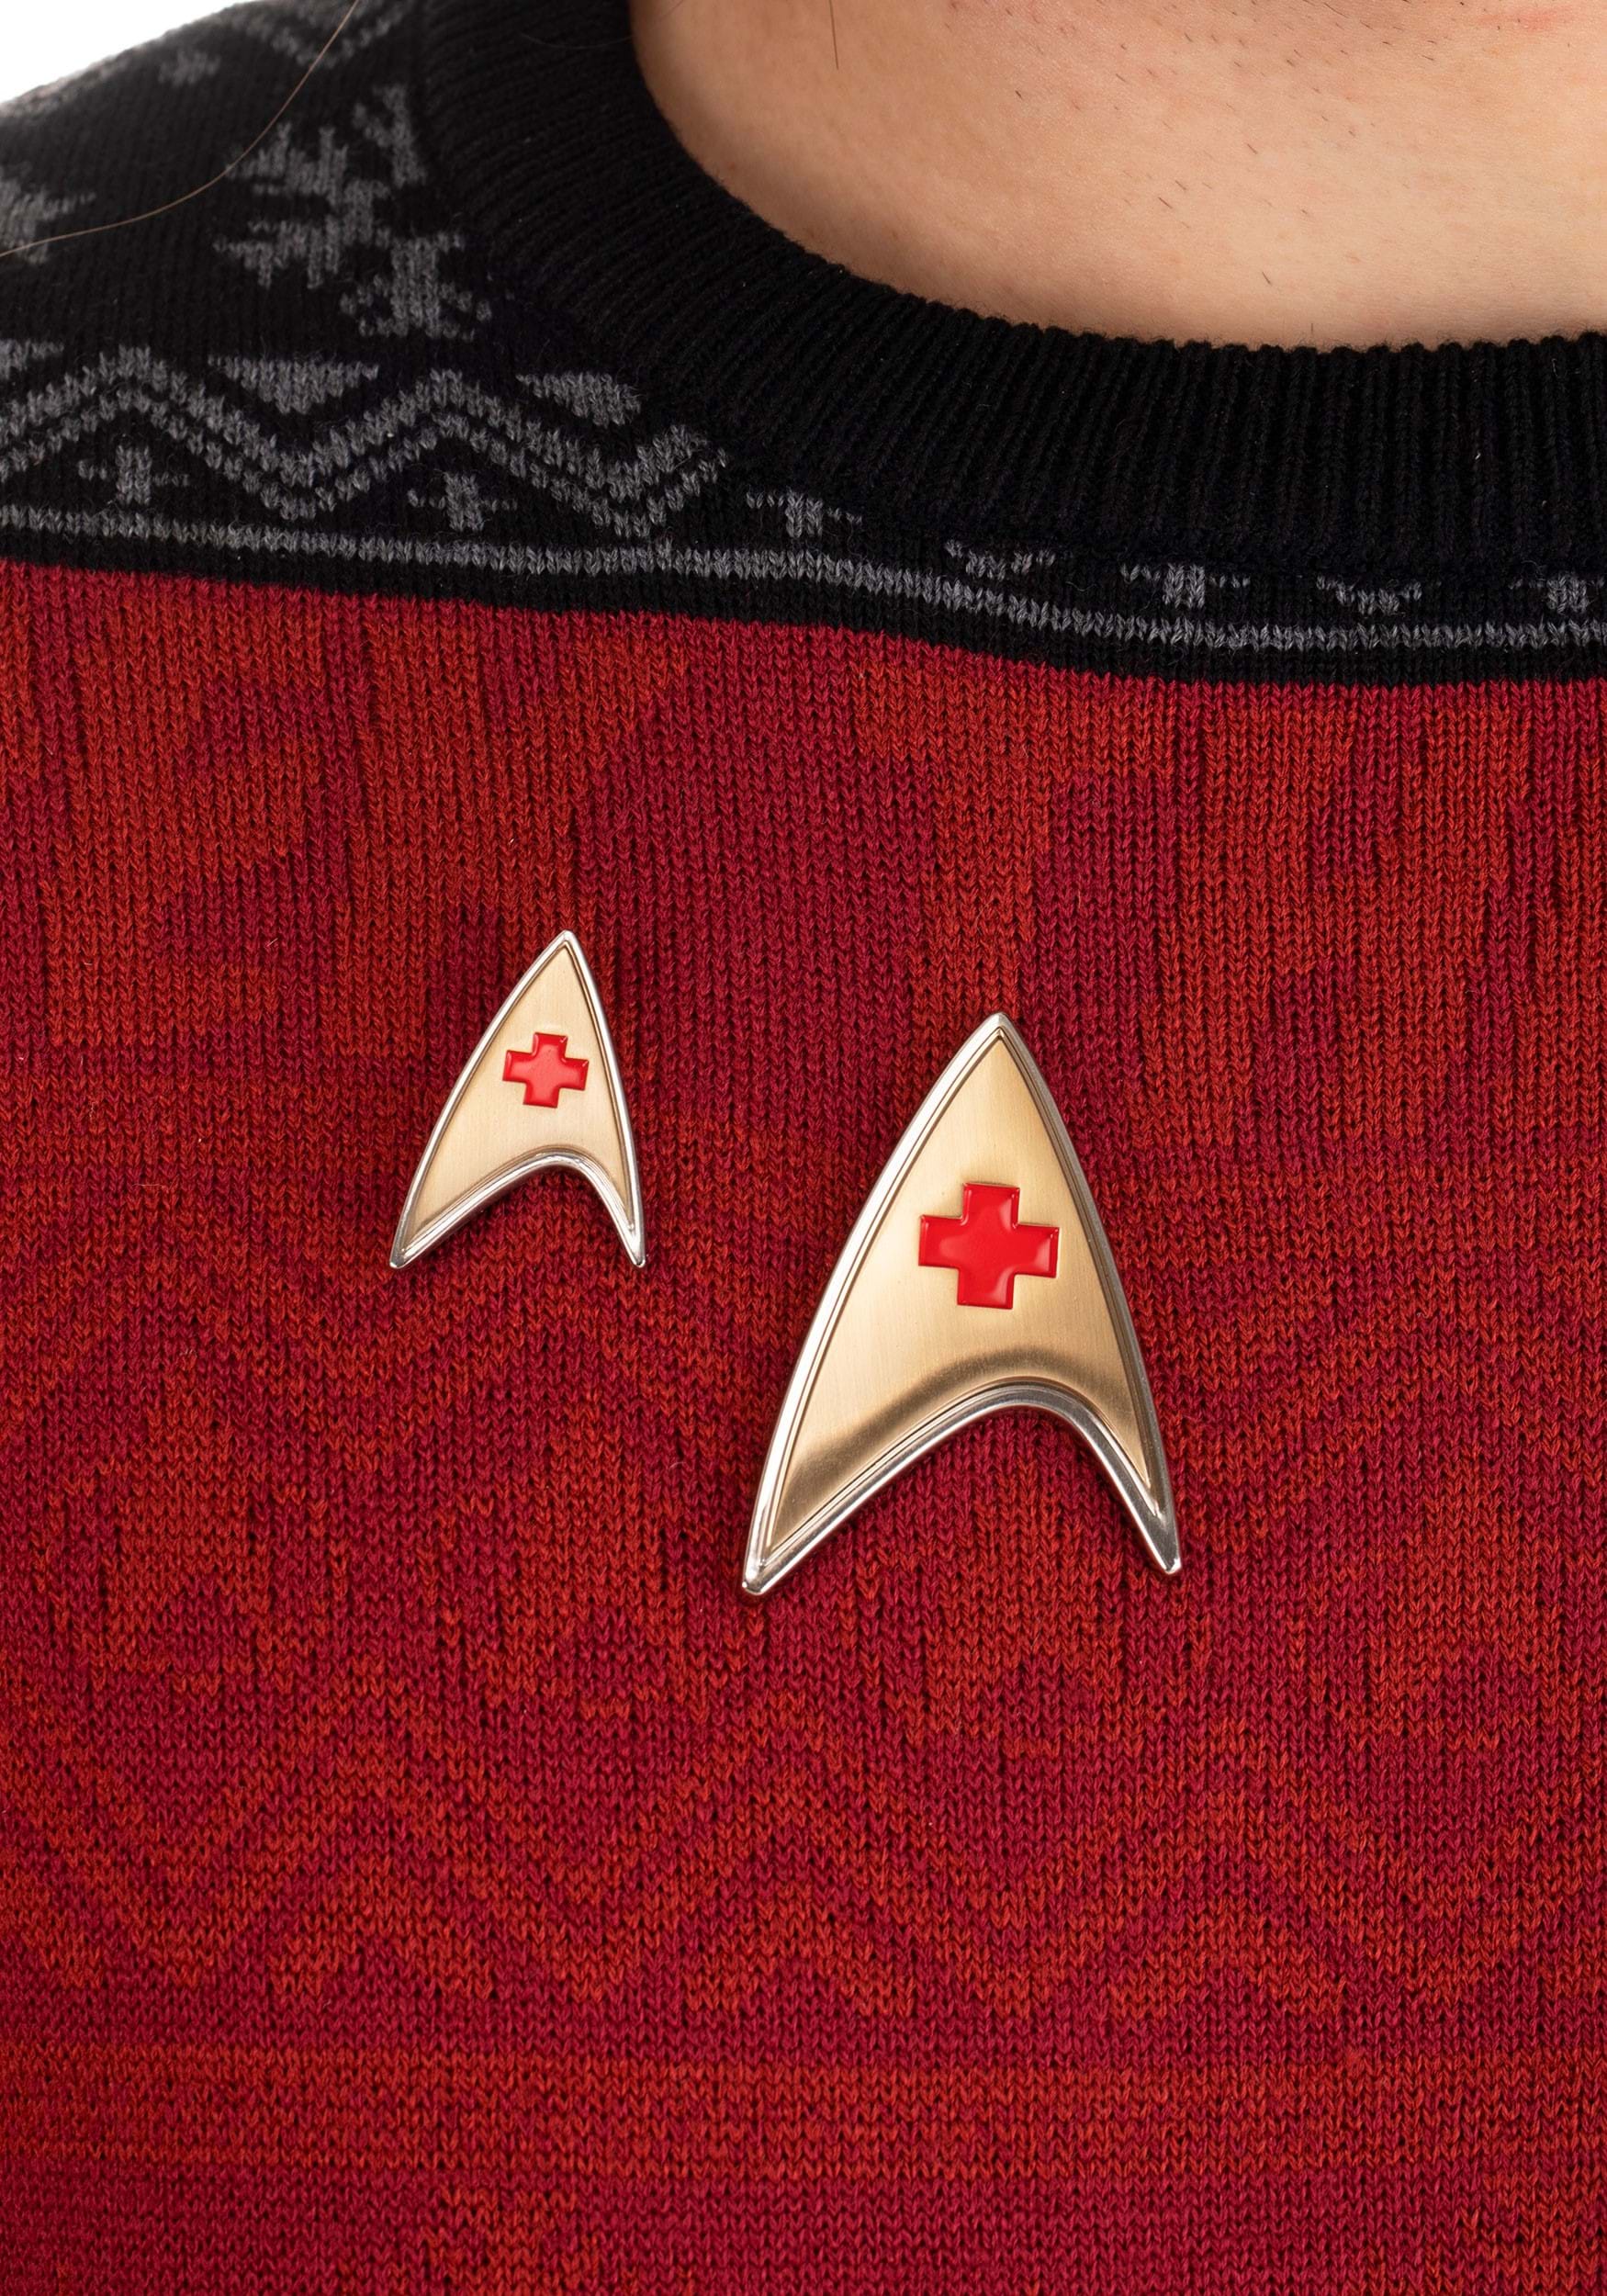 Star Trek Discovery Emblem Scarf Official Star Trek Merchandise NEW 